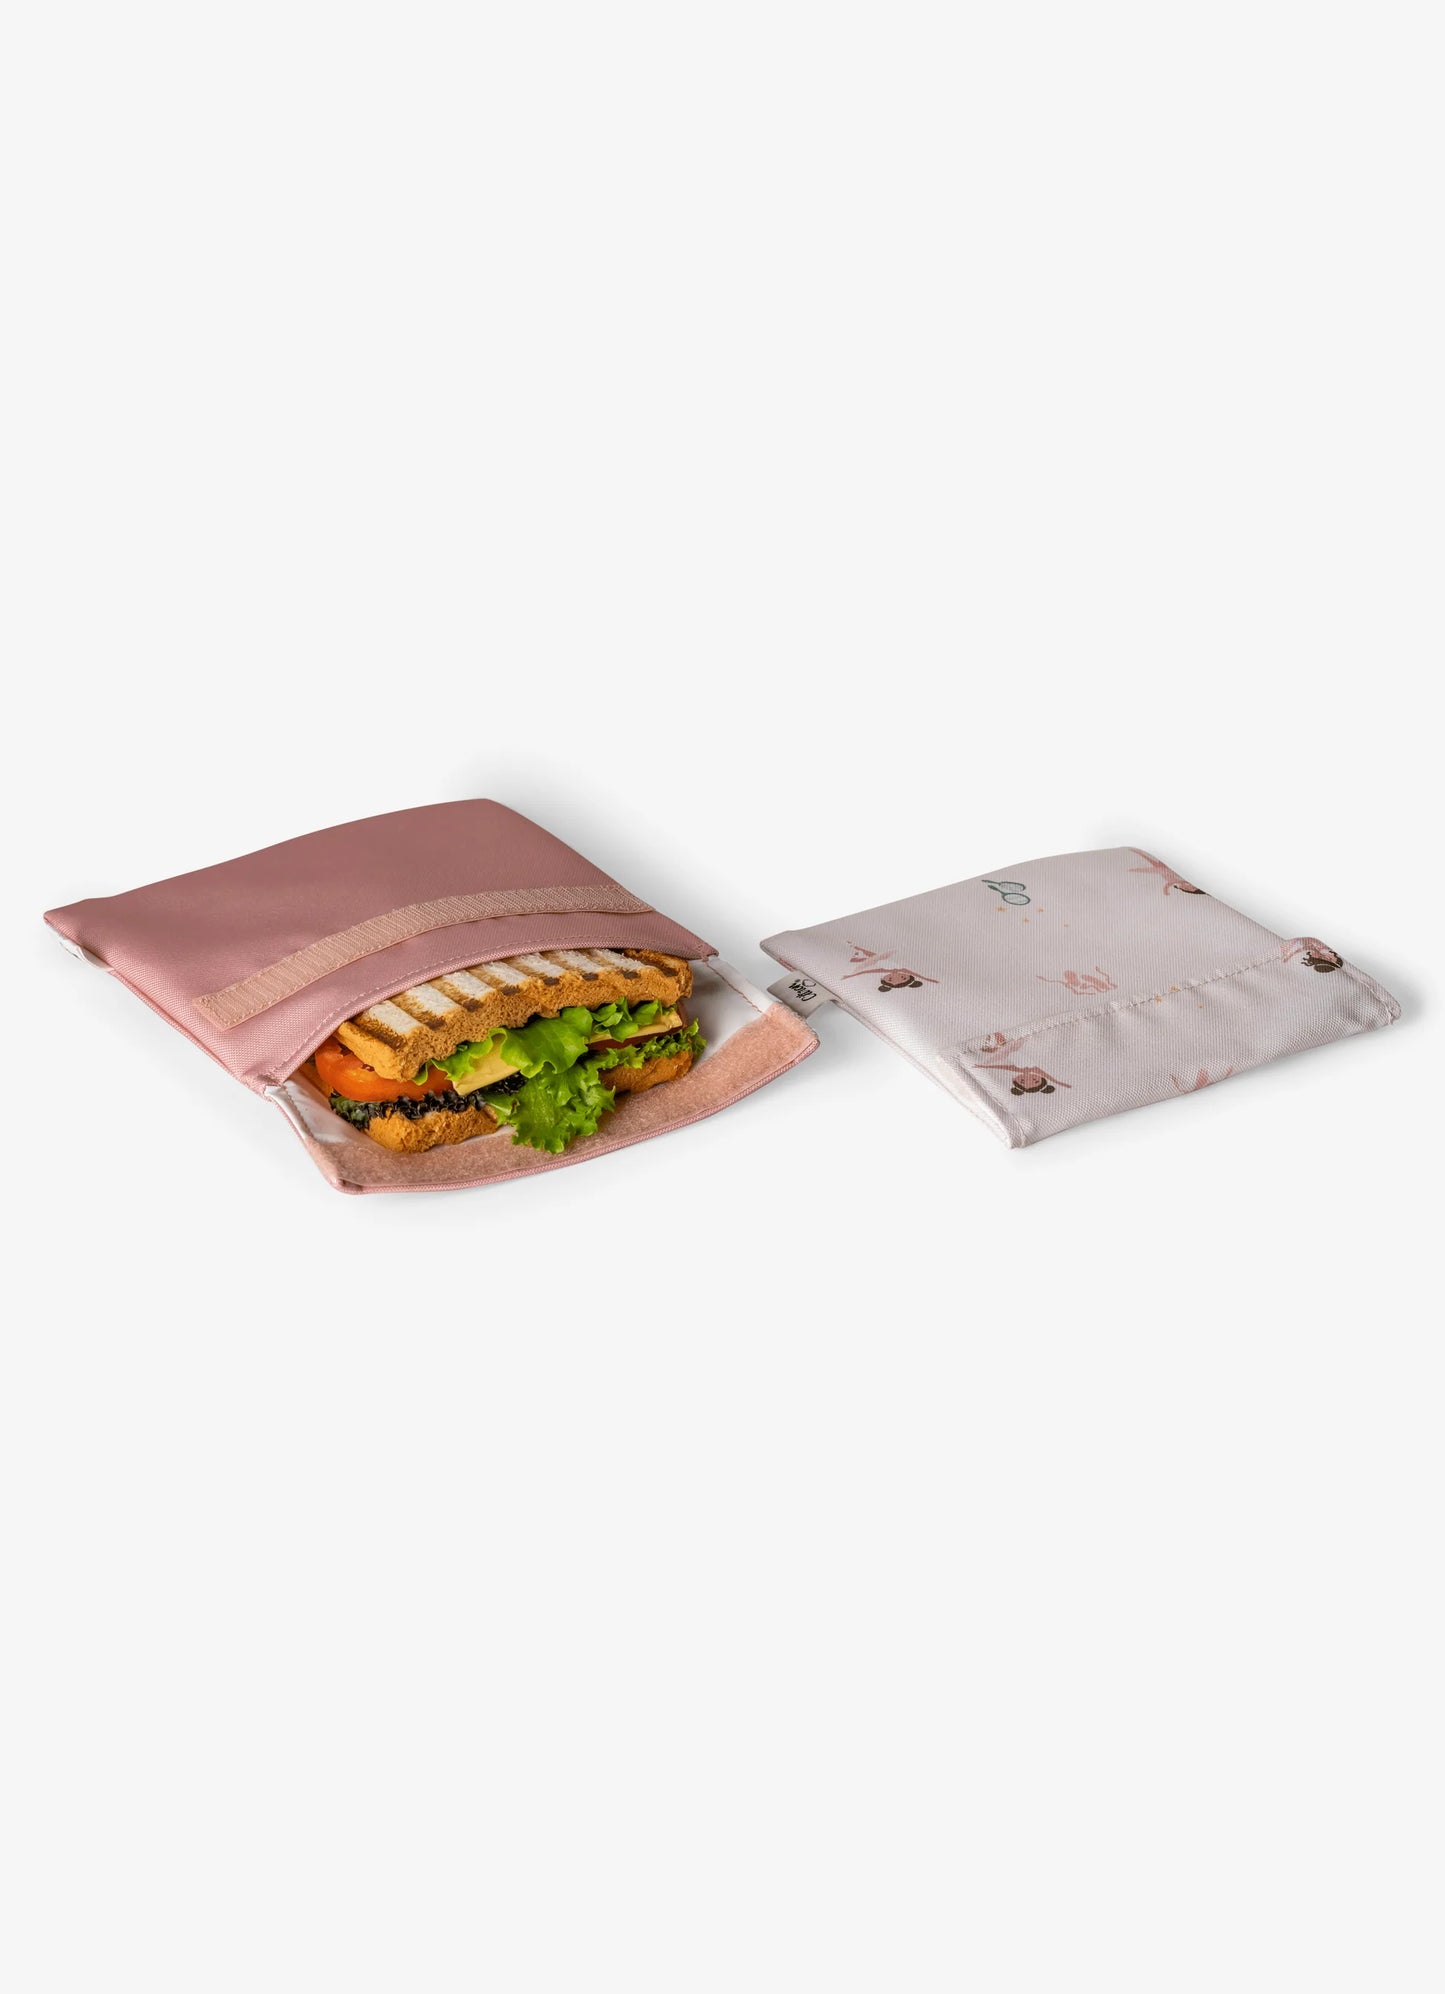 Two Reusable Sandwich Bags - Ballerina/Blush Pink